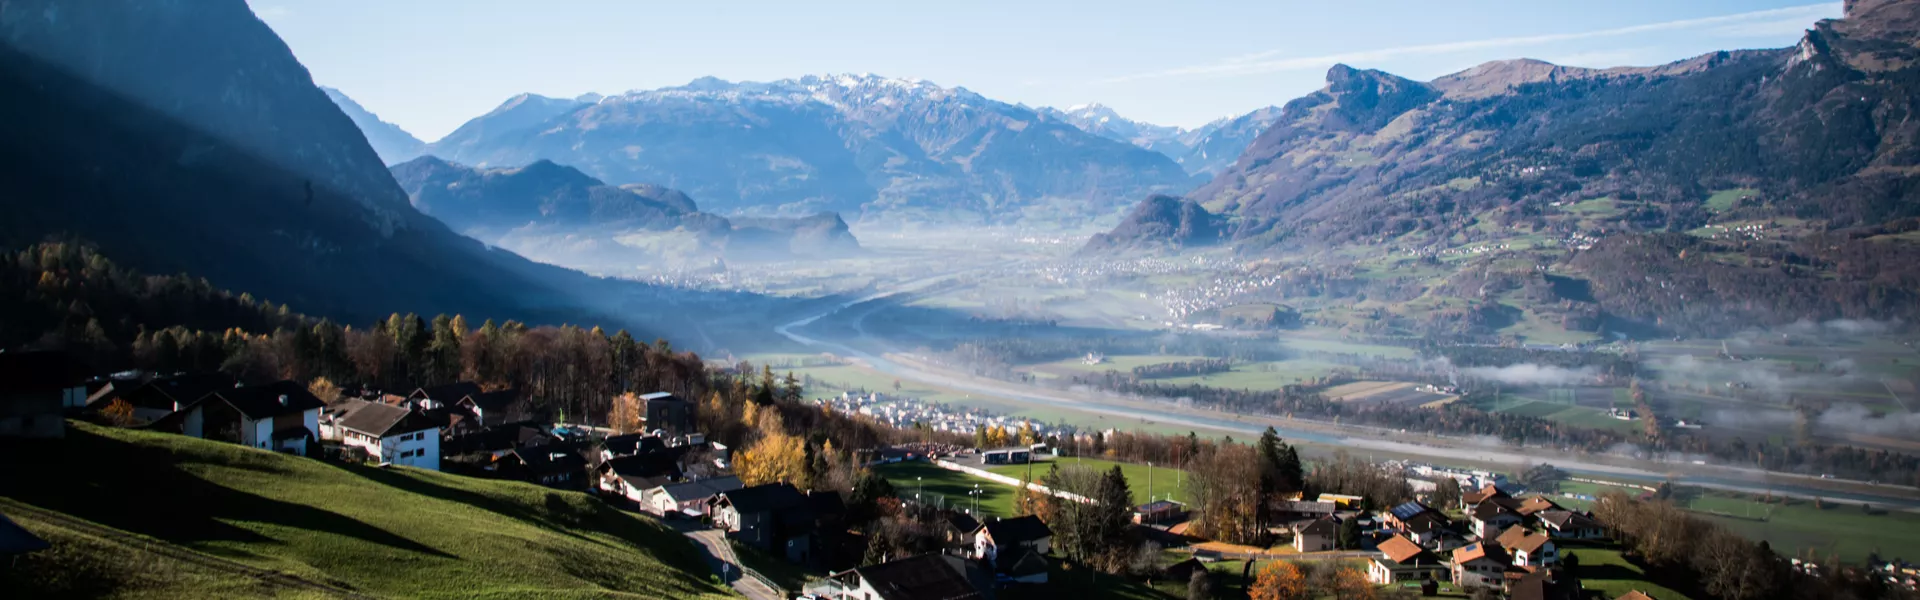 Liechtenstein Guided Tours and Travel Guide